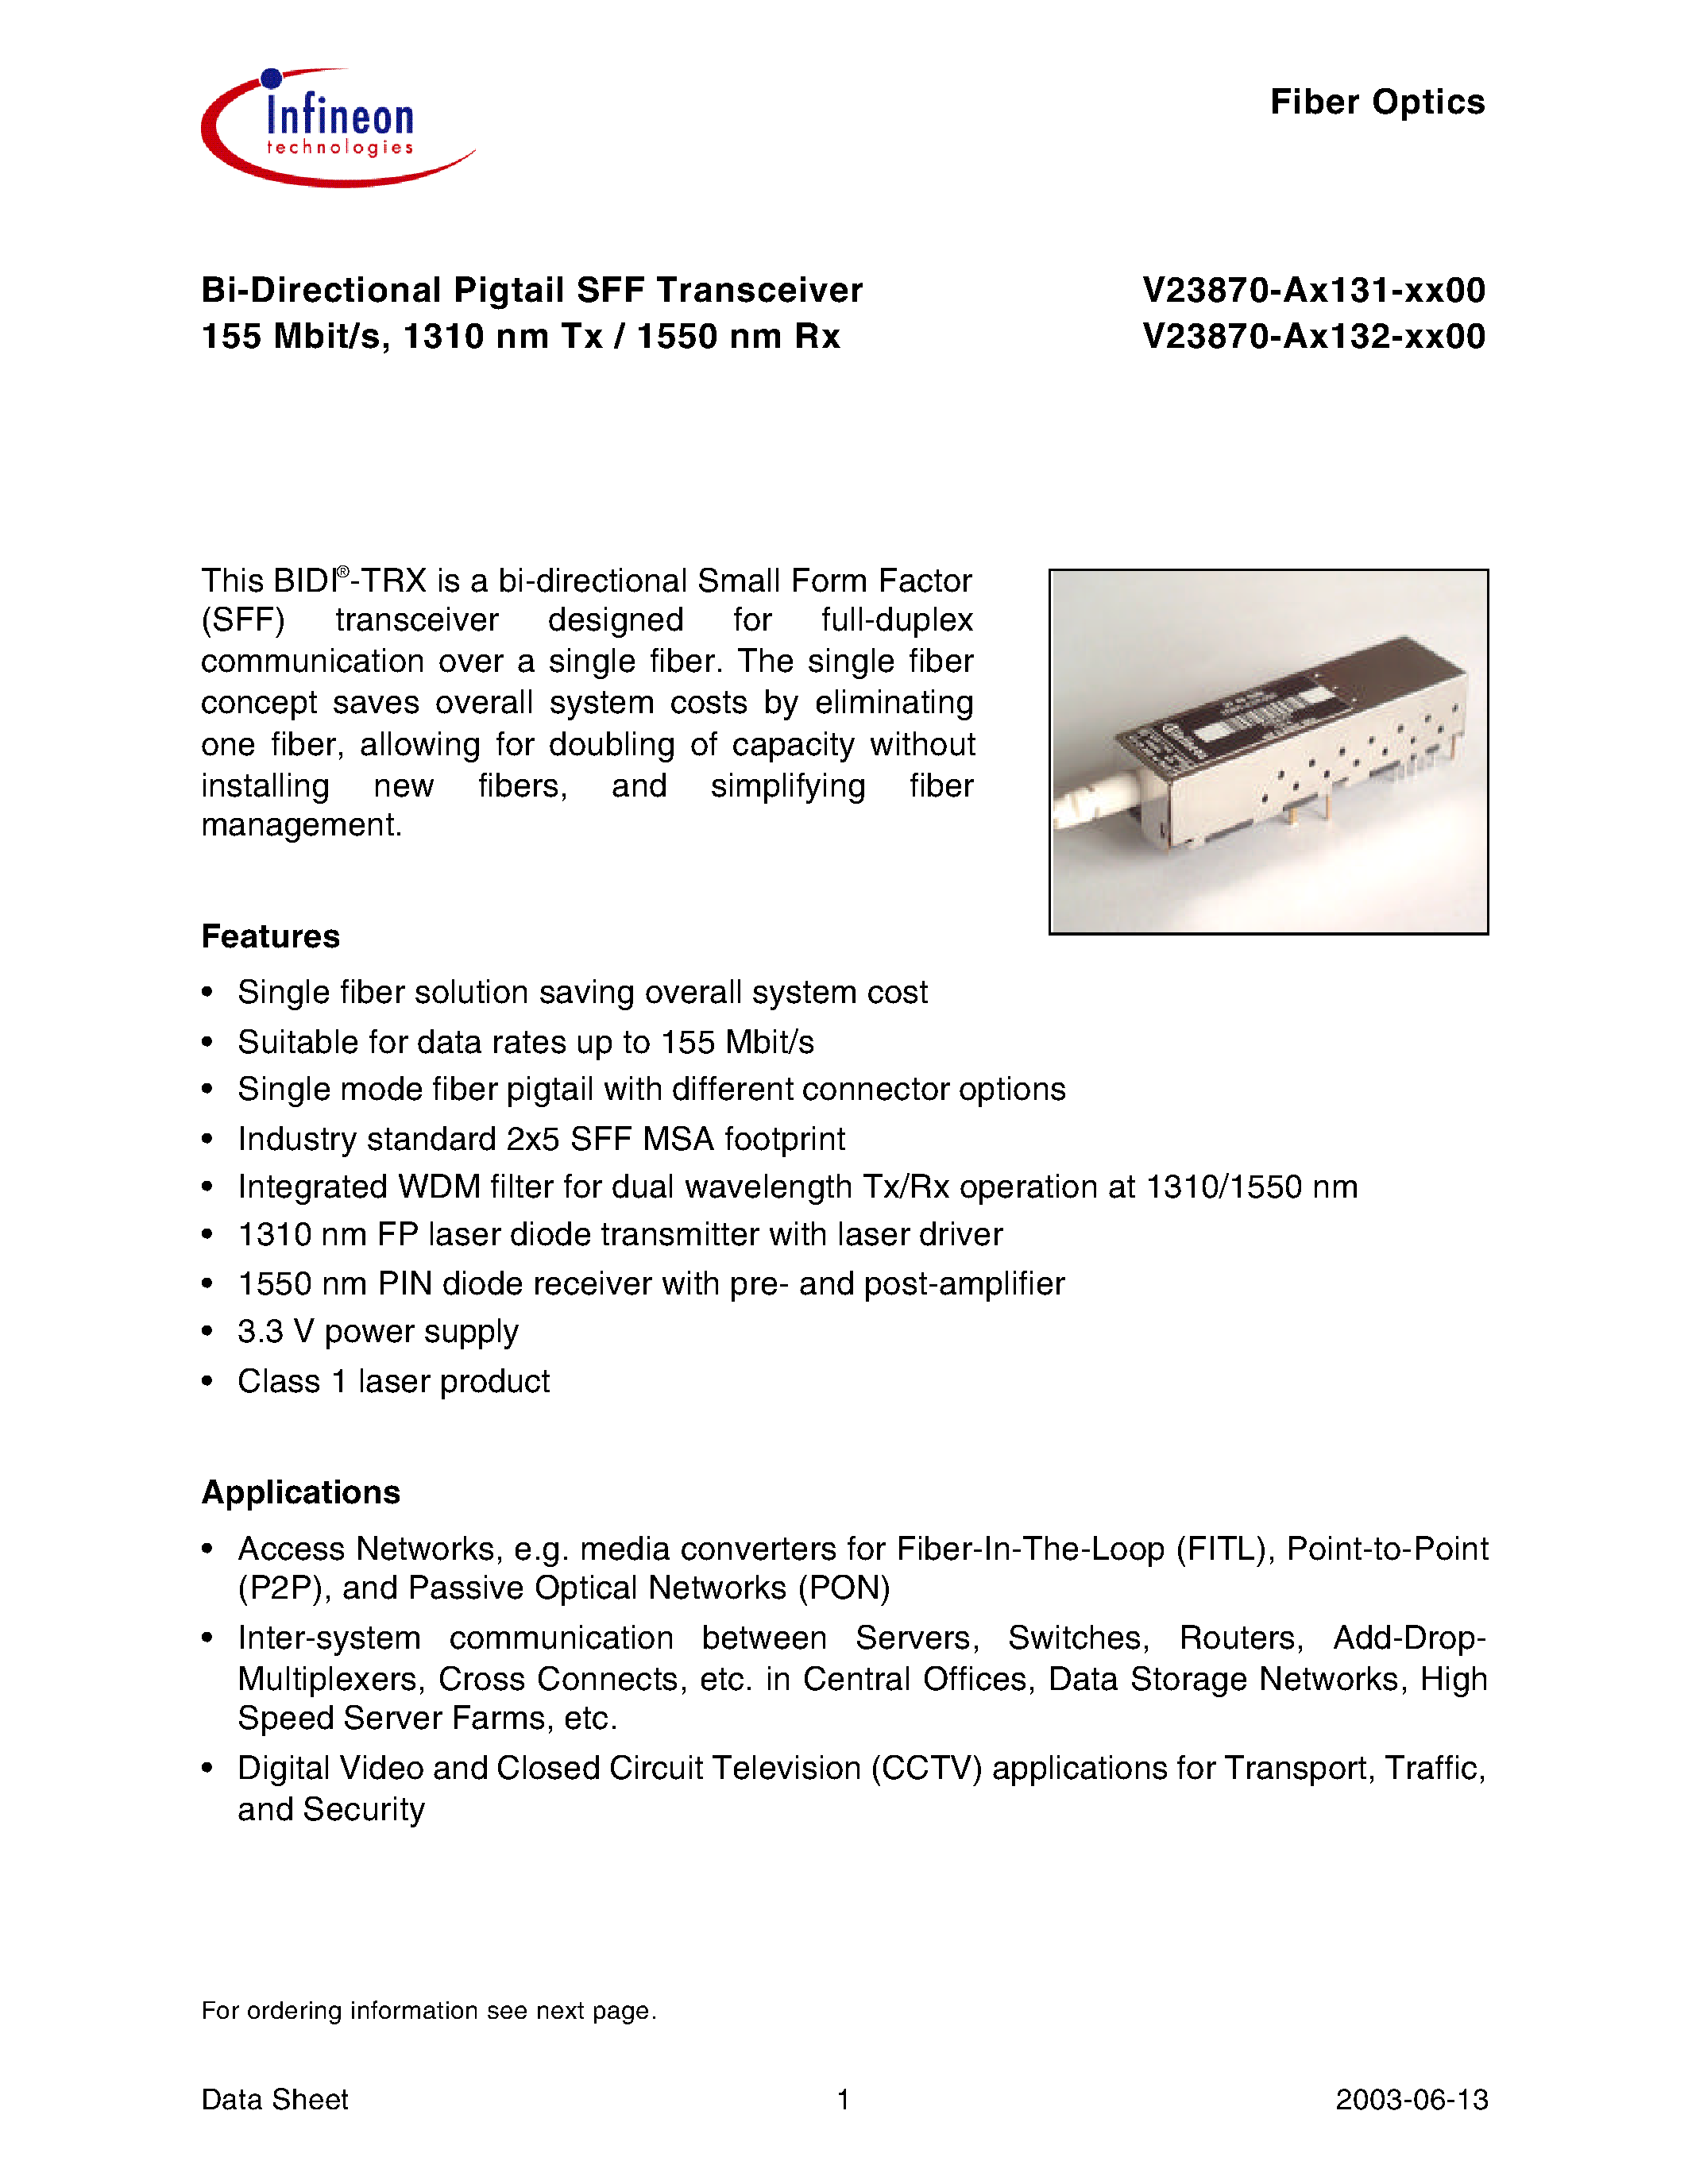 Даташит V23870-A3131-K100 - Bi-Directional Pigtail SFF Transceiver 155 Mbit/s/ 1310 nm Tx / 1550 nm Rx страница 1